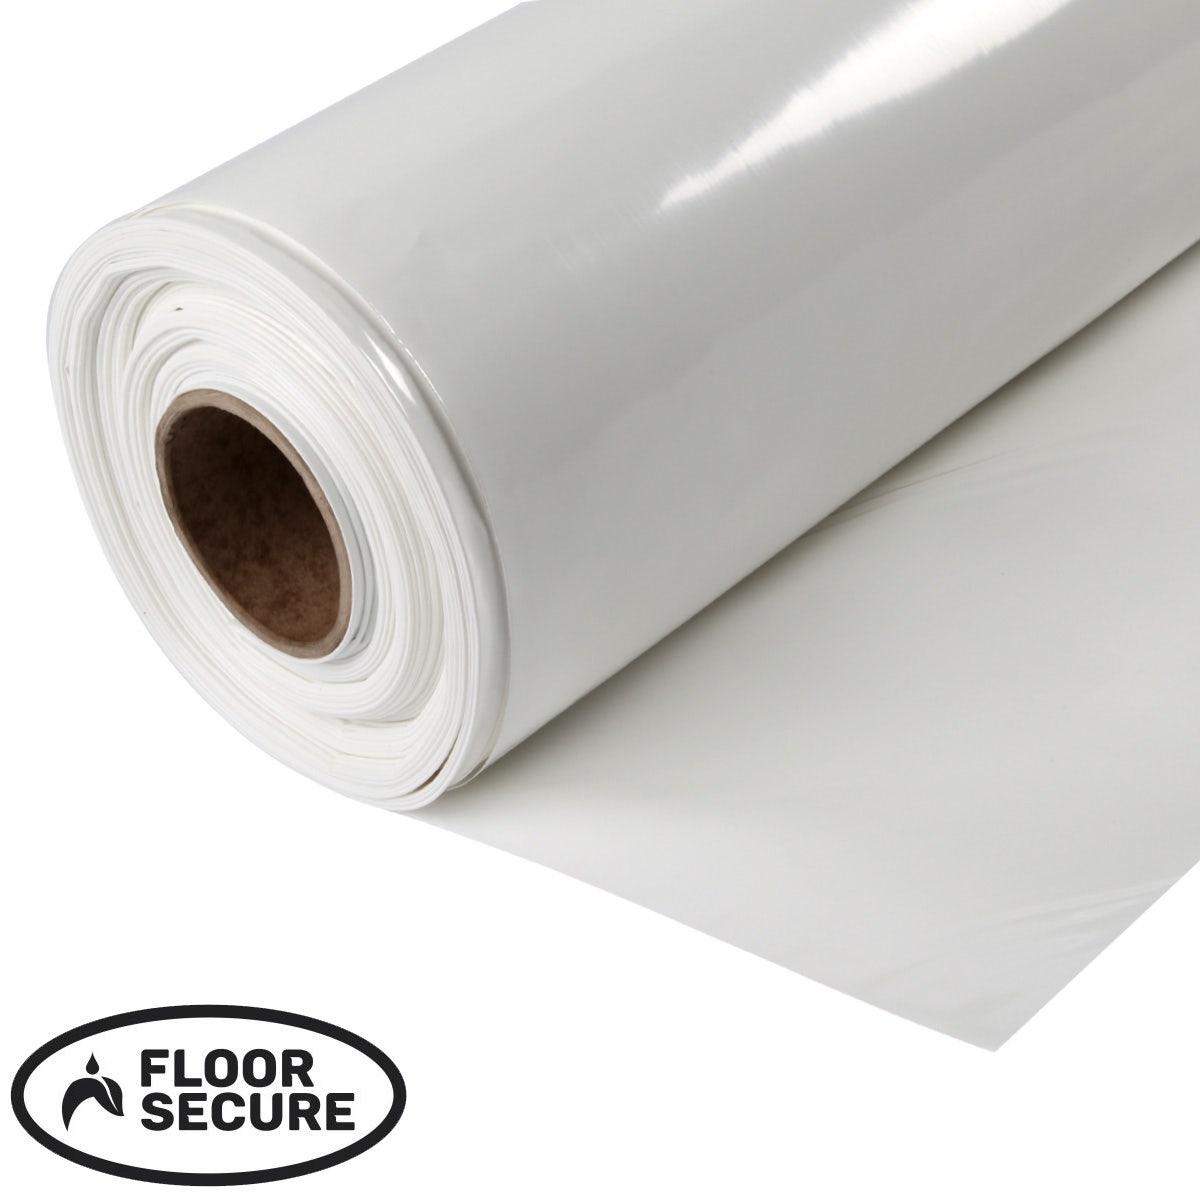 White Floor Secure Sheeting 250mu - 4m Wide